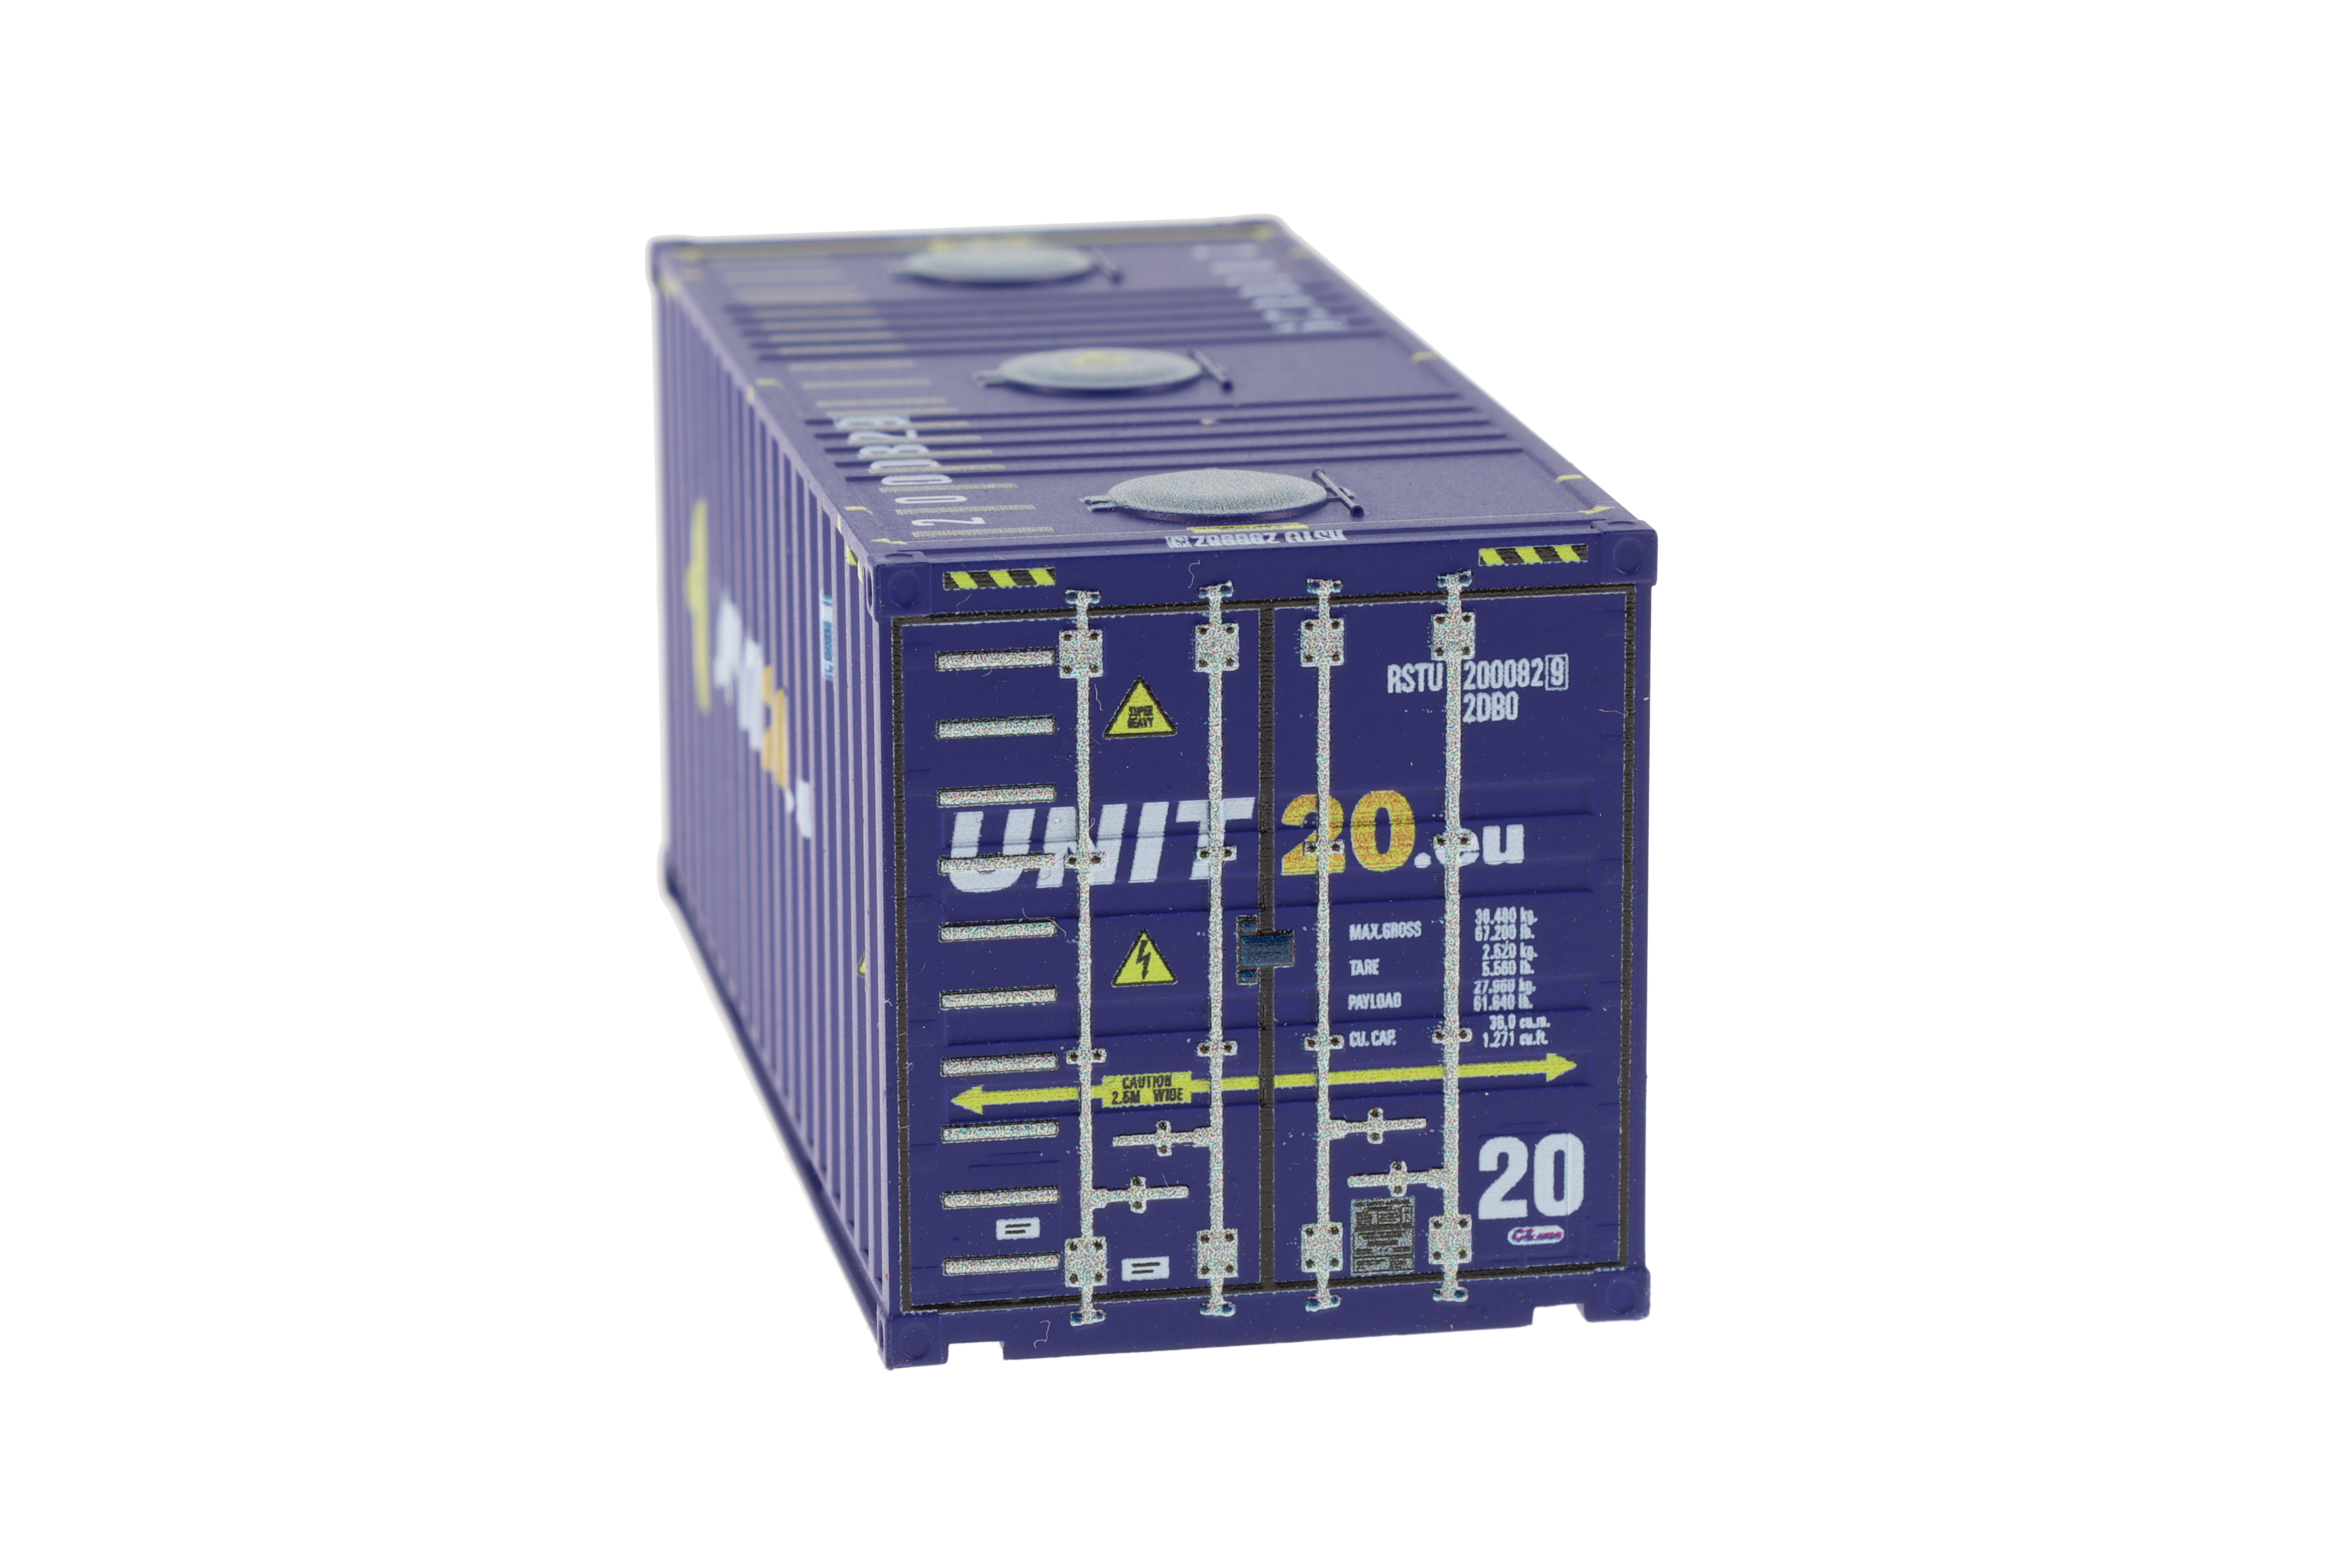 1:87 20´Bulk-Container UNIT20 blau, Behälternummer: RSTU 200082